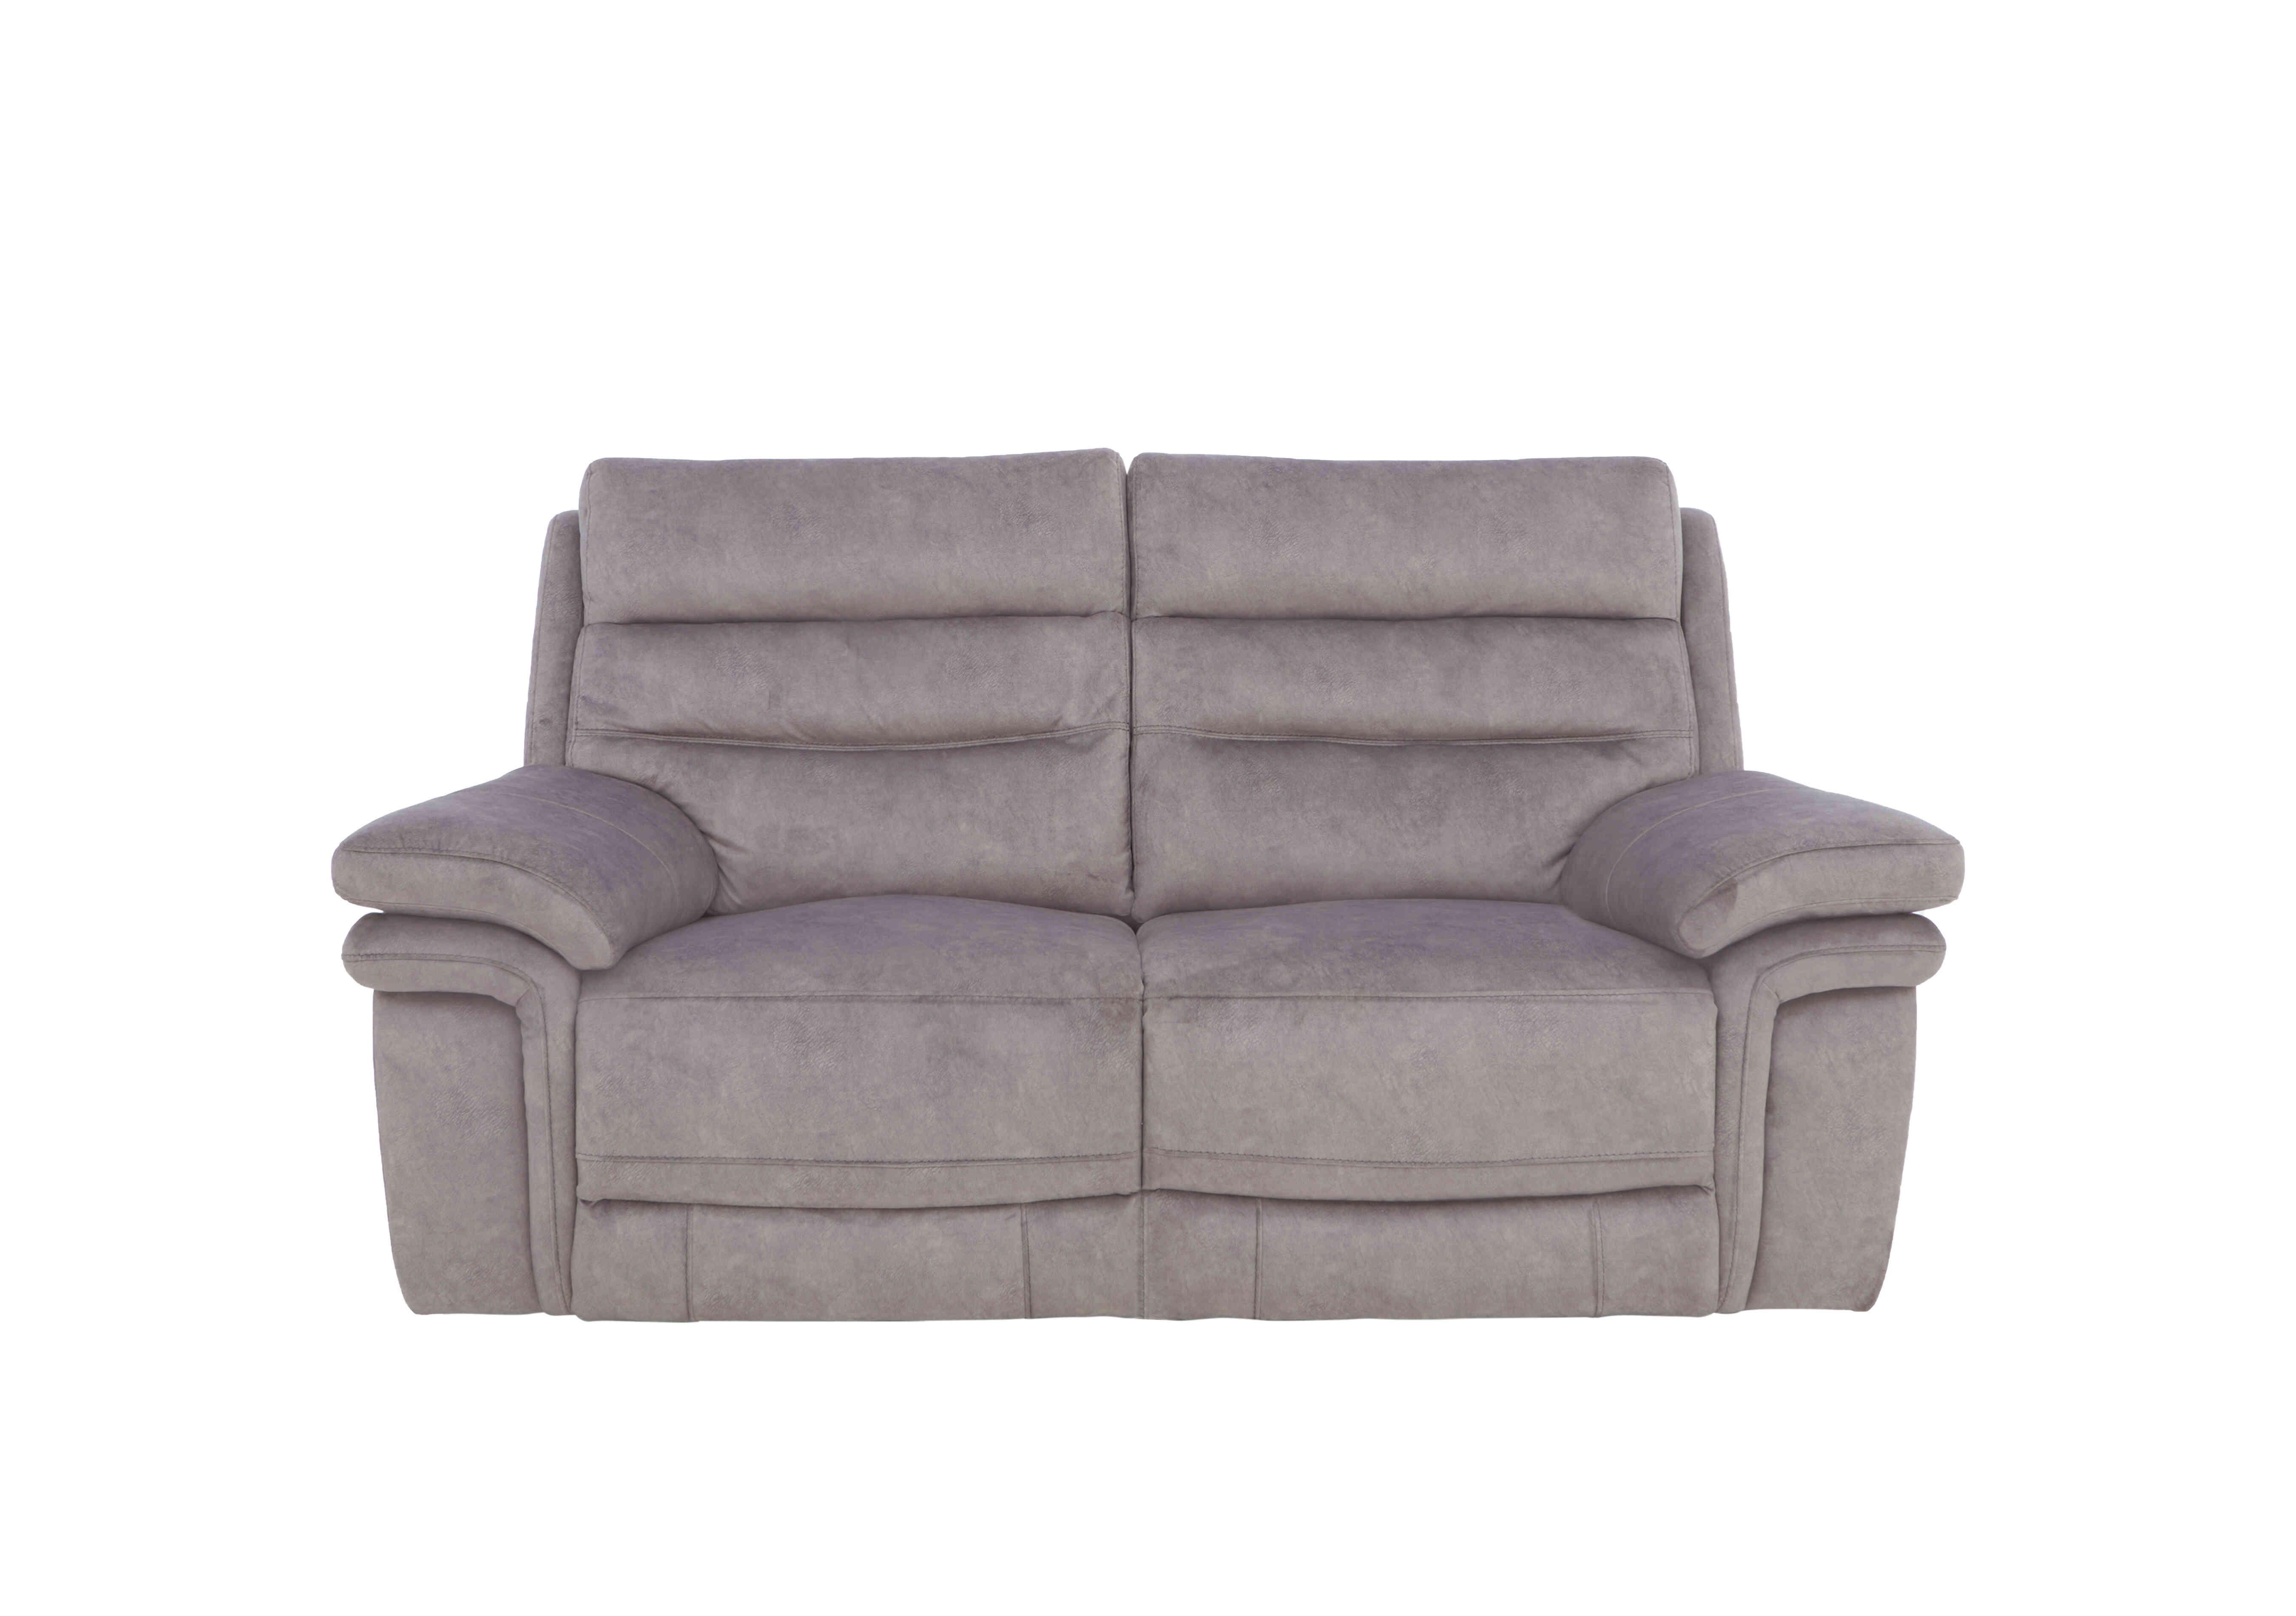 Berlin 2 Seater Fabric Sofa in Light Grey Be-0102 on Furniture Village